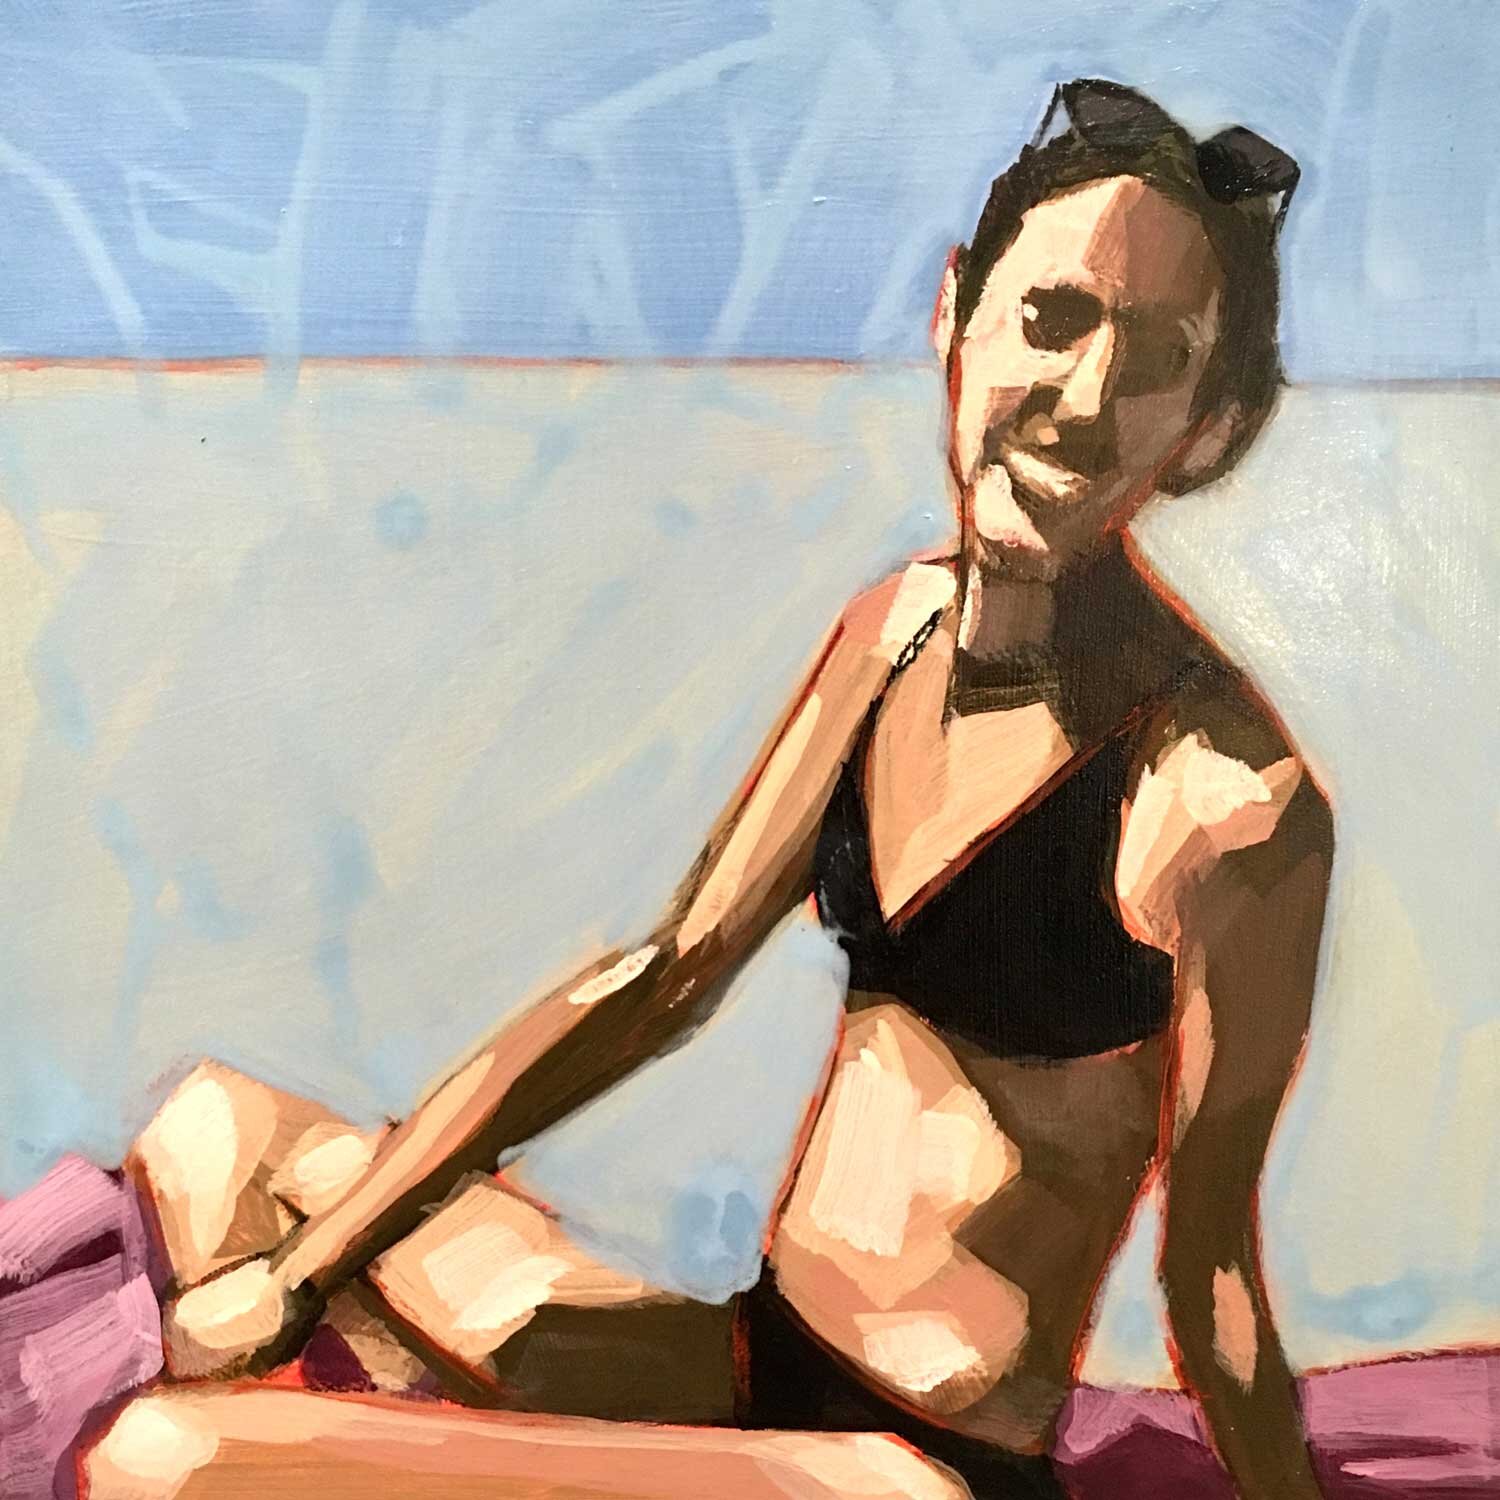 Beach Day (2019) acrylic on panel, 6x6"